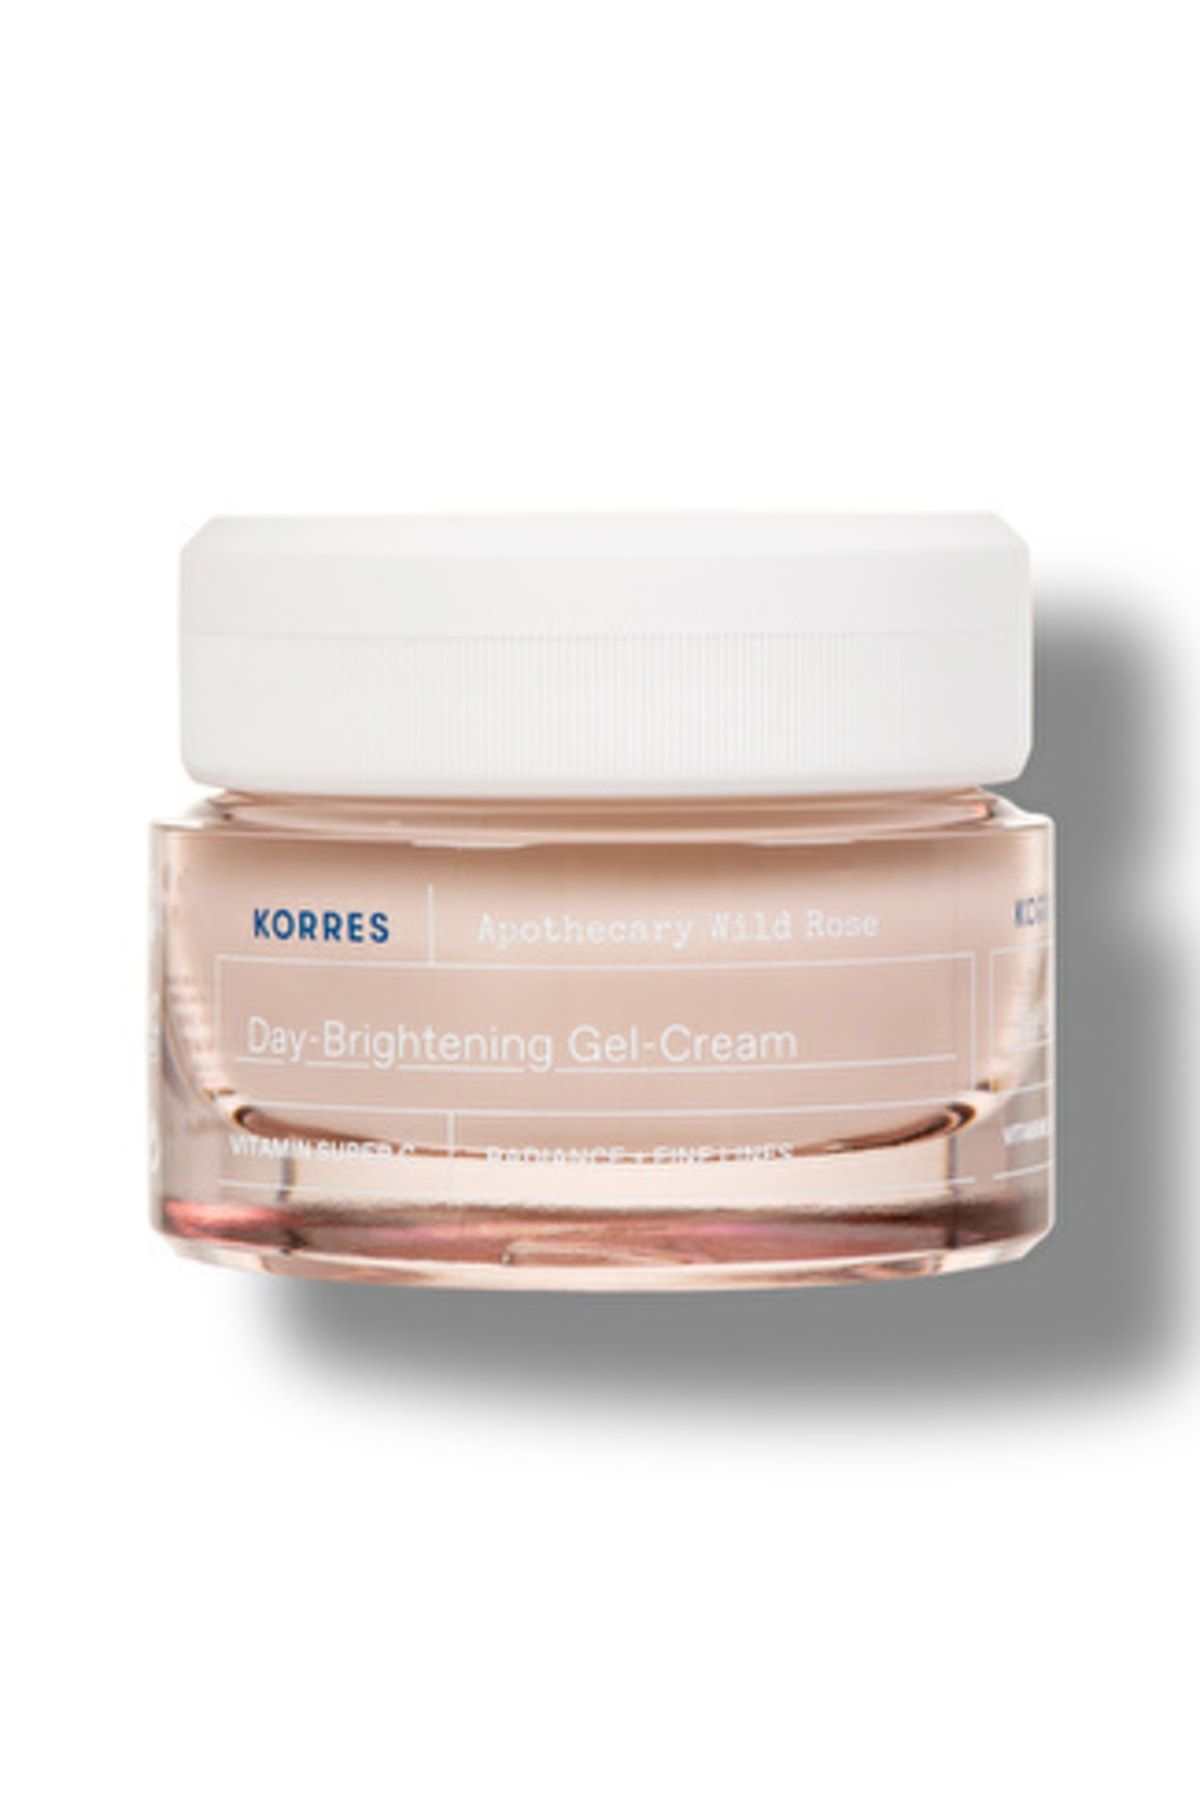 Korres Apothecary Wild Rose Day-brightening Gel-cream 40ml [normal-combination Skin]